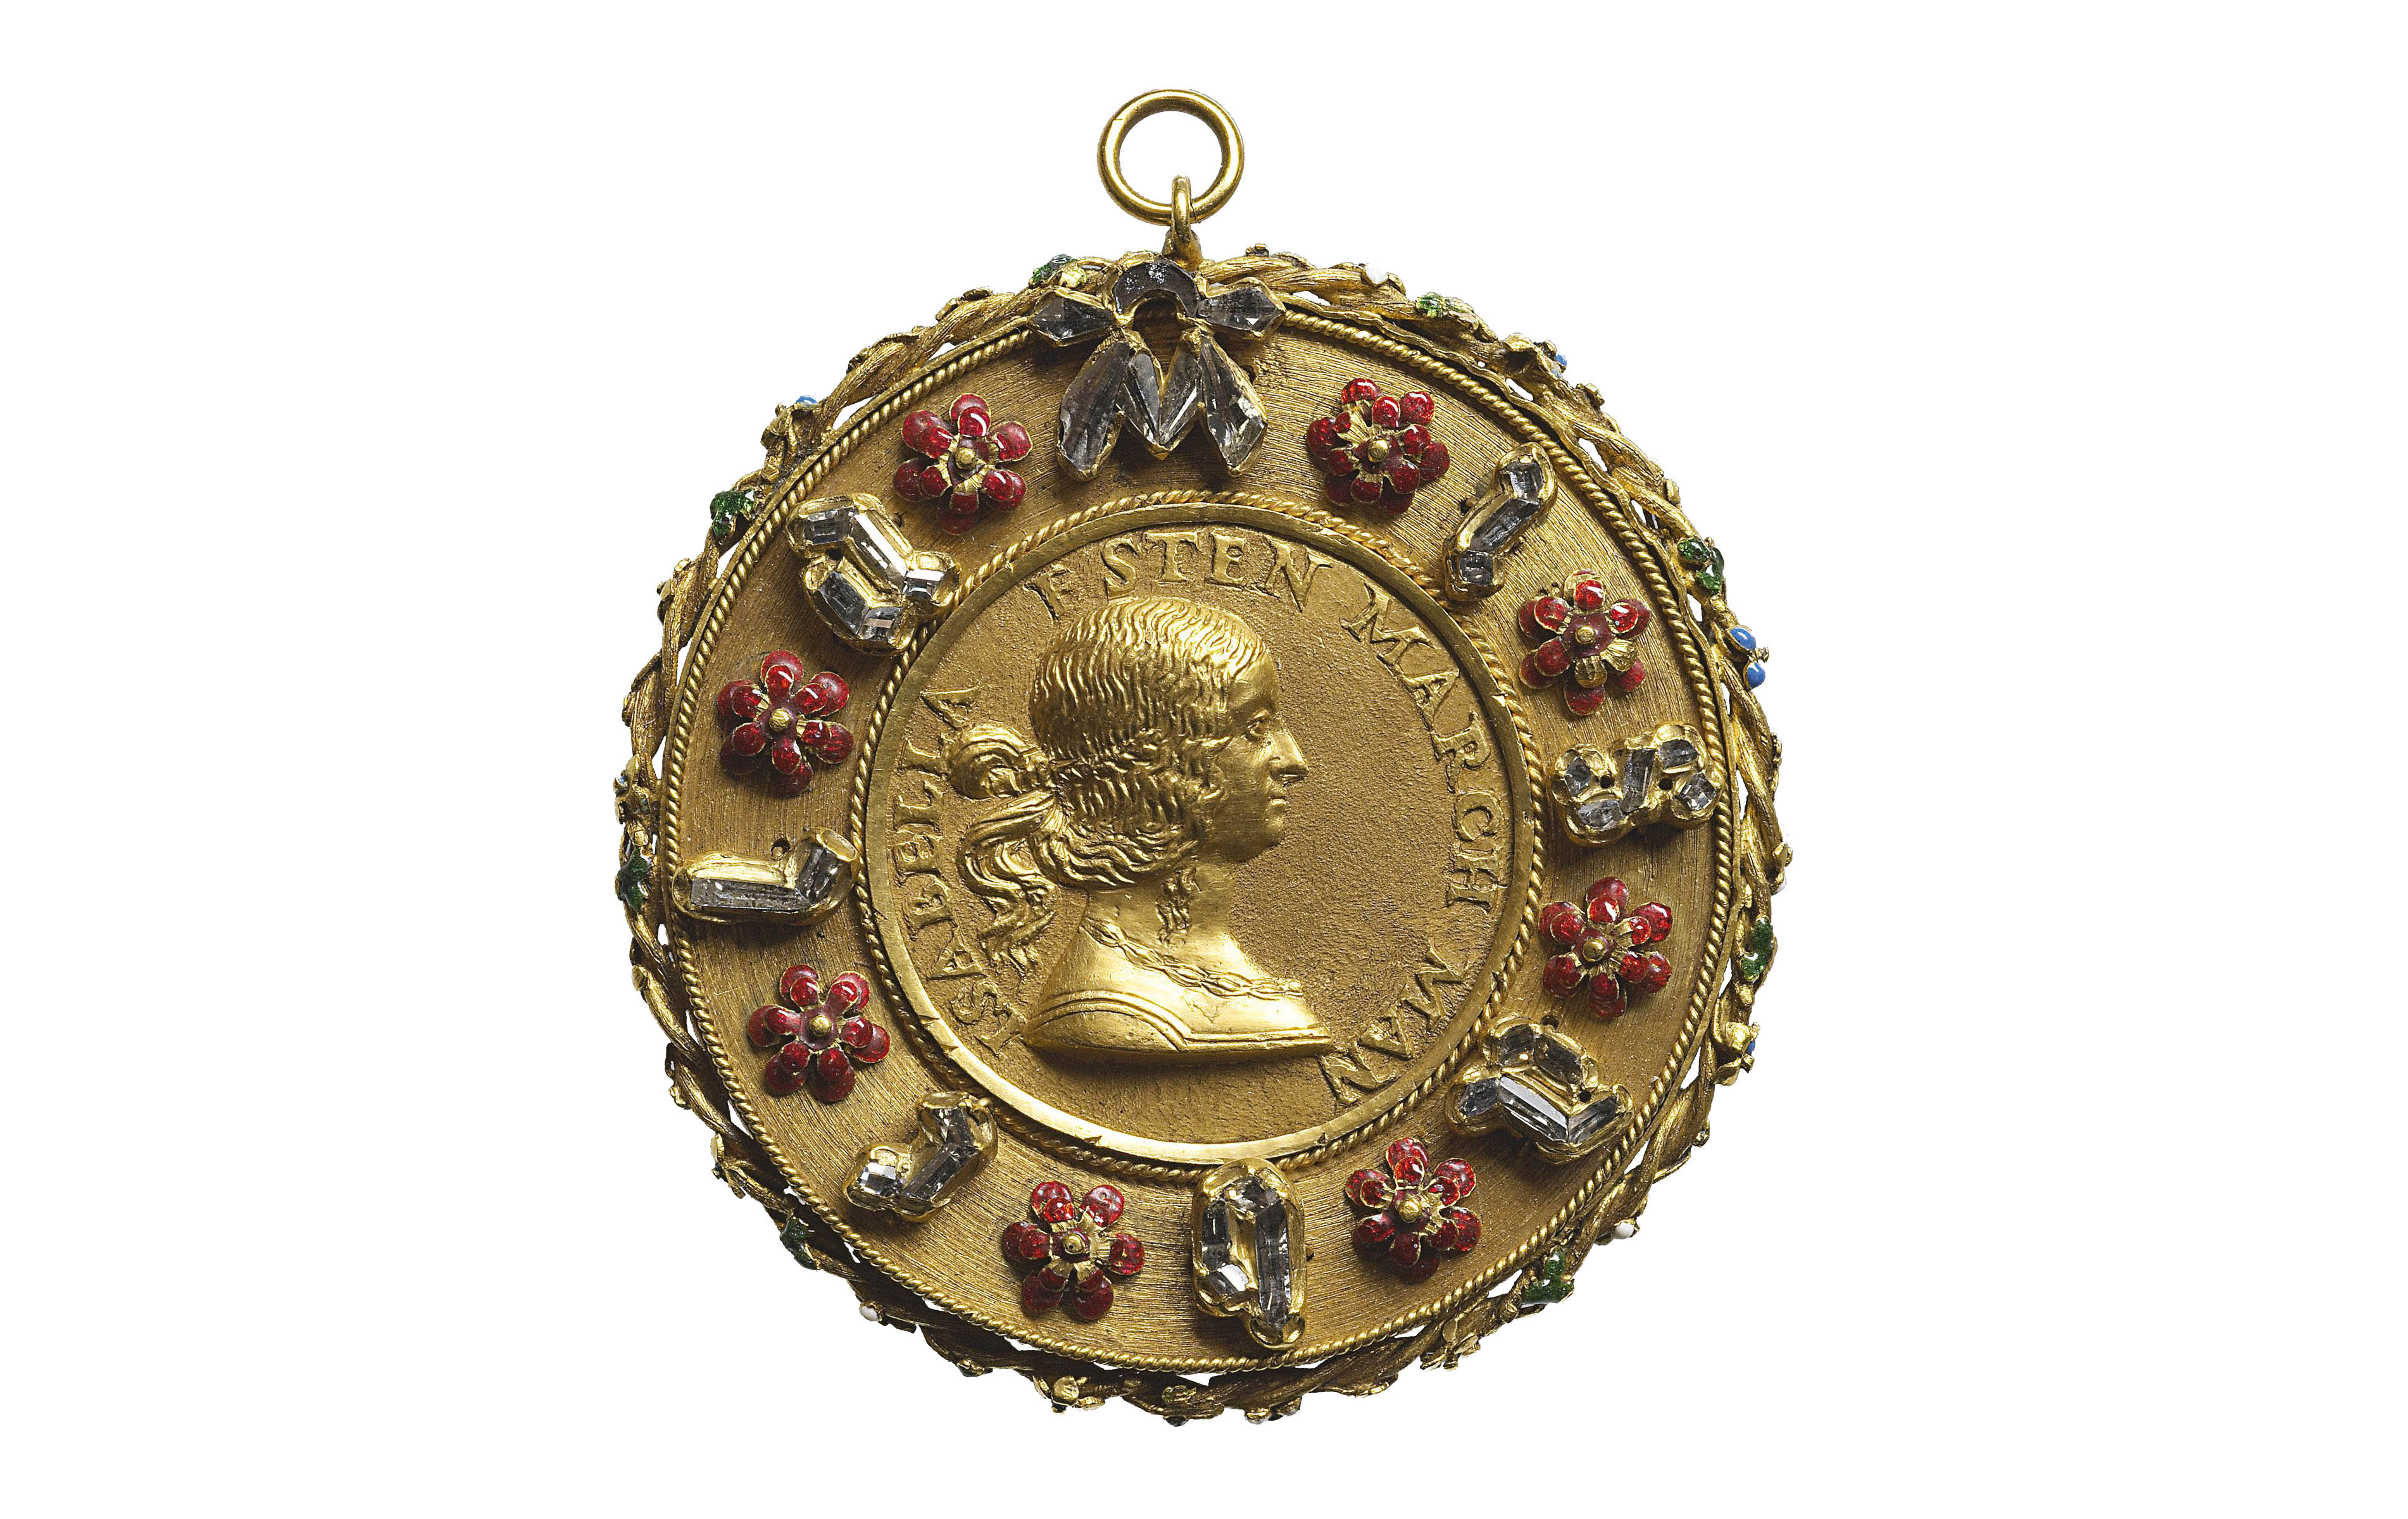 Giancristoforo Romano, Portrait medal of Isabella d’Este [obverse], 1495 – 1498, gold with diamonds and enamel, 7 cm diameter (Kunsthistorisches Museum, Vienna)